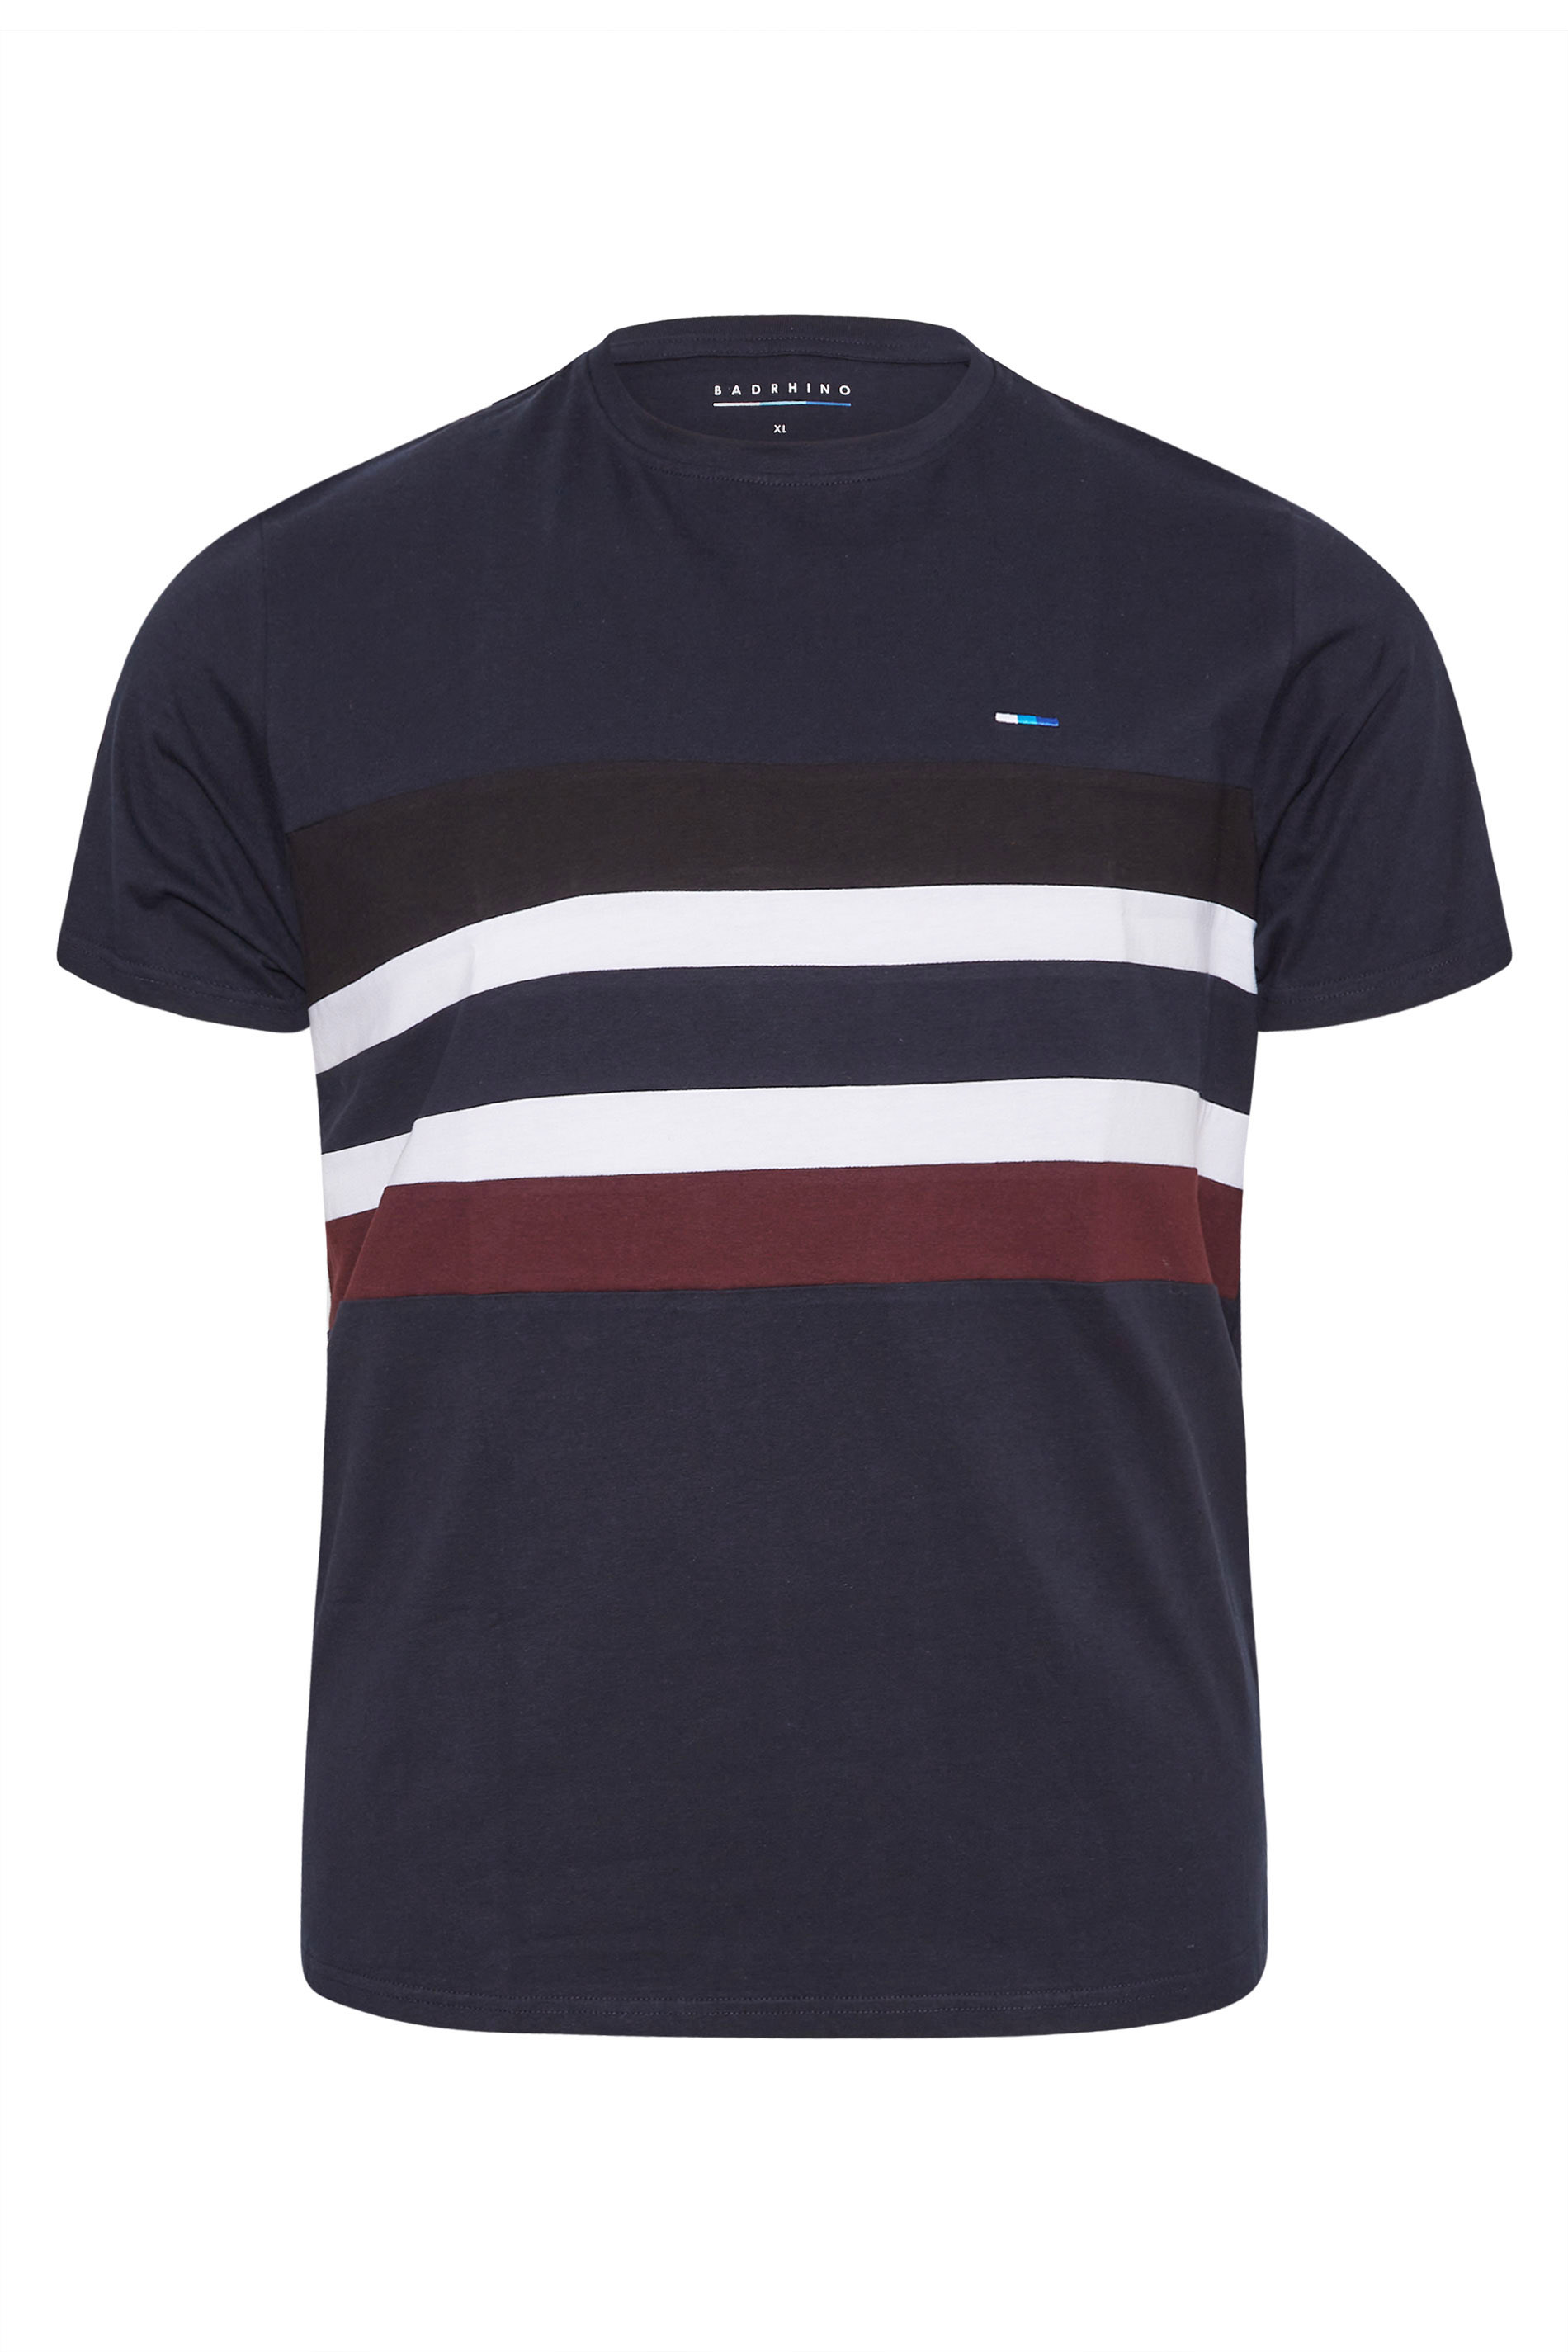 BadRhino Big & Tall Navy Blue Chest Stripe T-Shirt 1